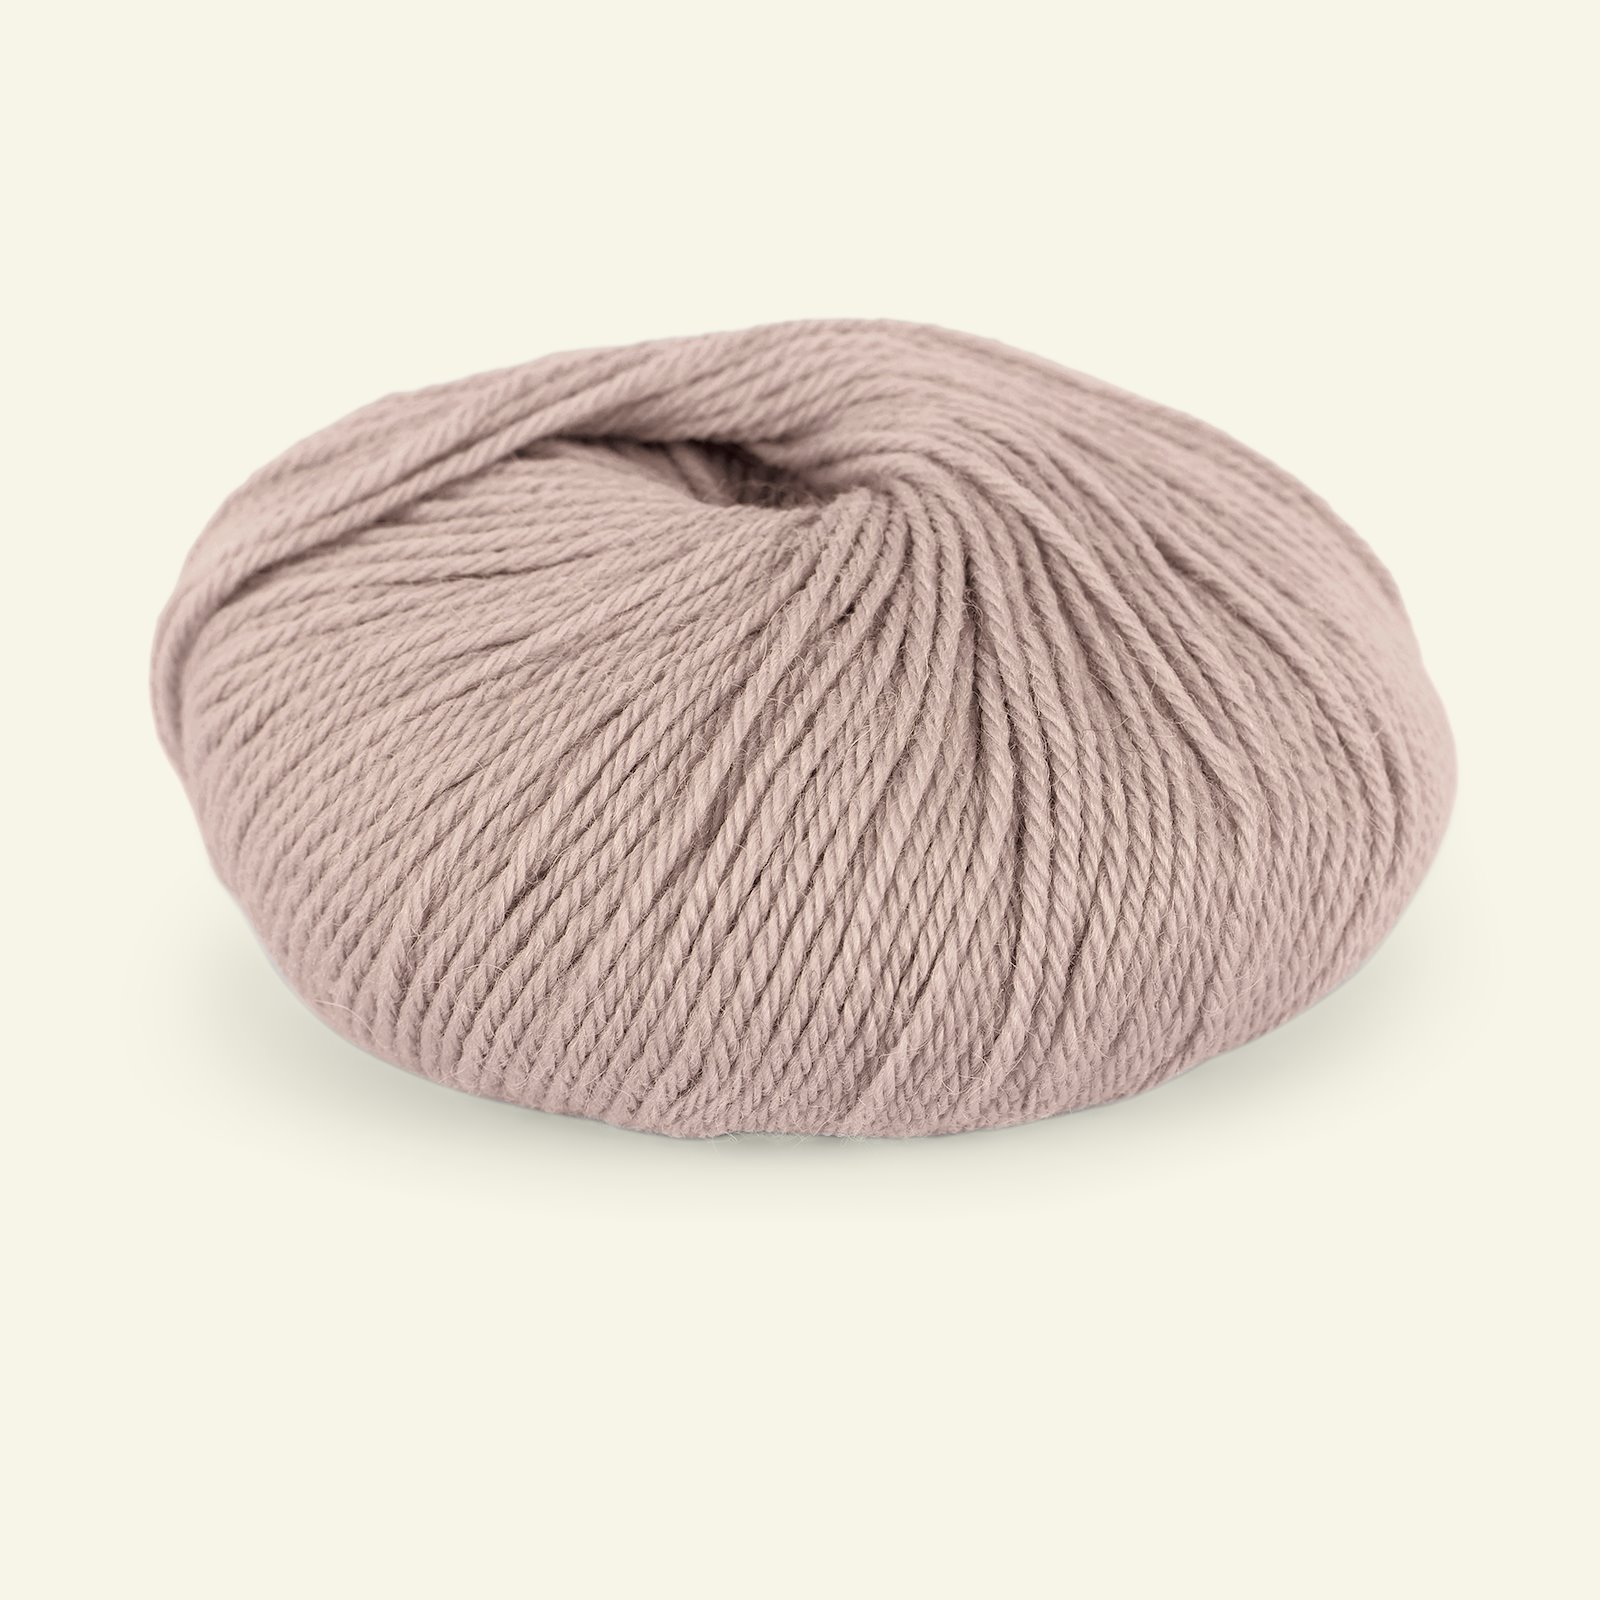 Du Store Alpakka, alpaca merino mixed yarn "Sterk", beige (854) 90000678_pack_b